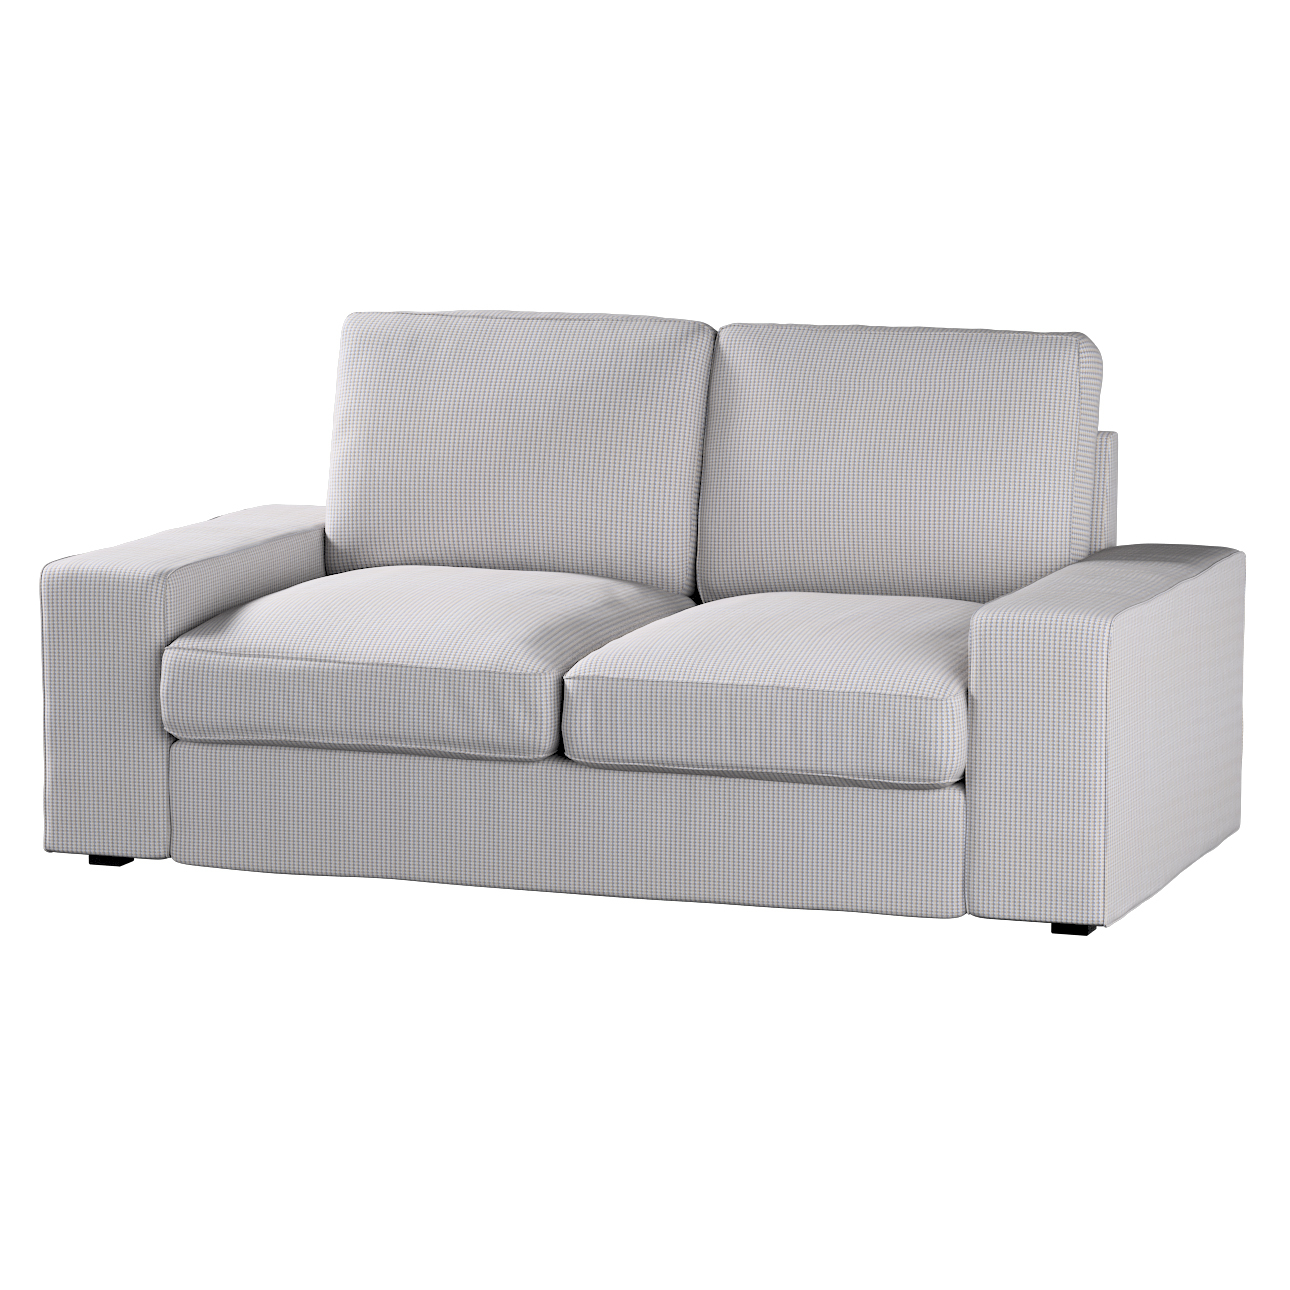 Bezug für Kivik 2-Sitzer Sofa, beige-blau, Bezug für Sofa Kivik 2-Sitzer, L günstig online kaufen